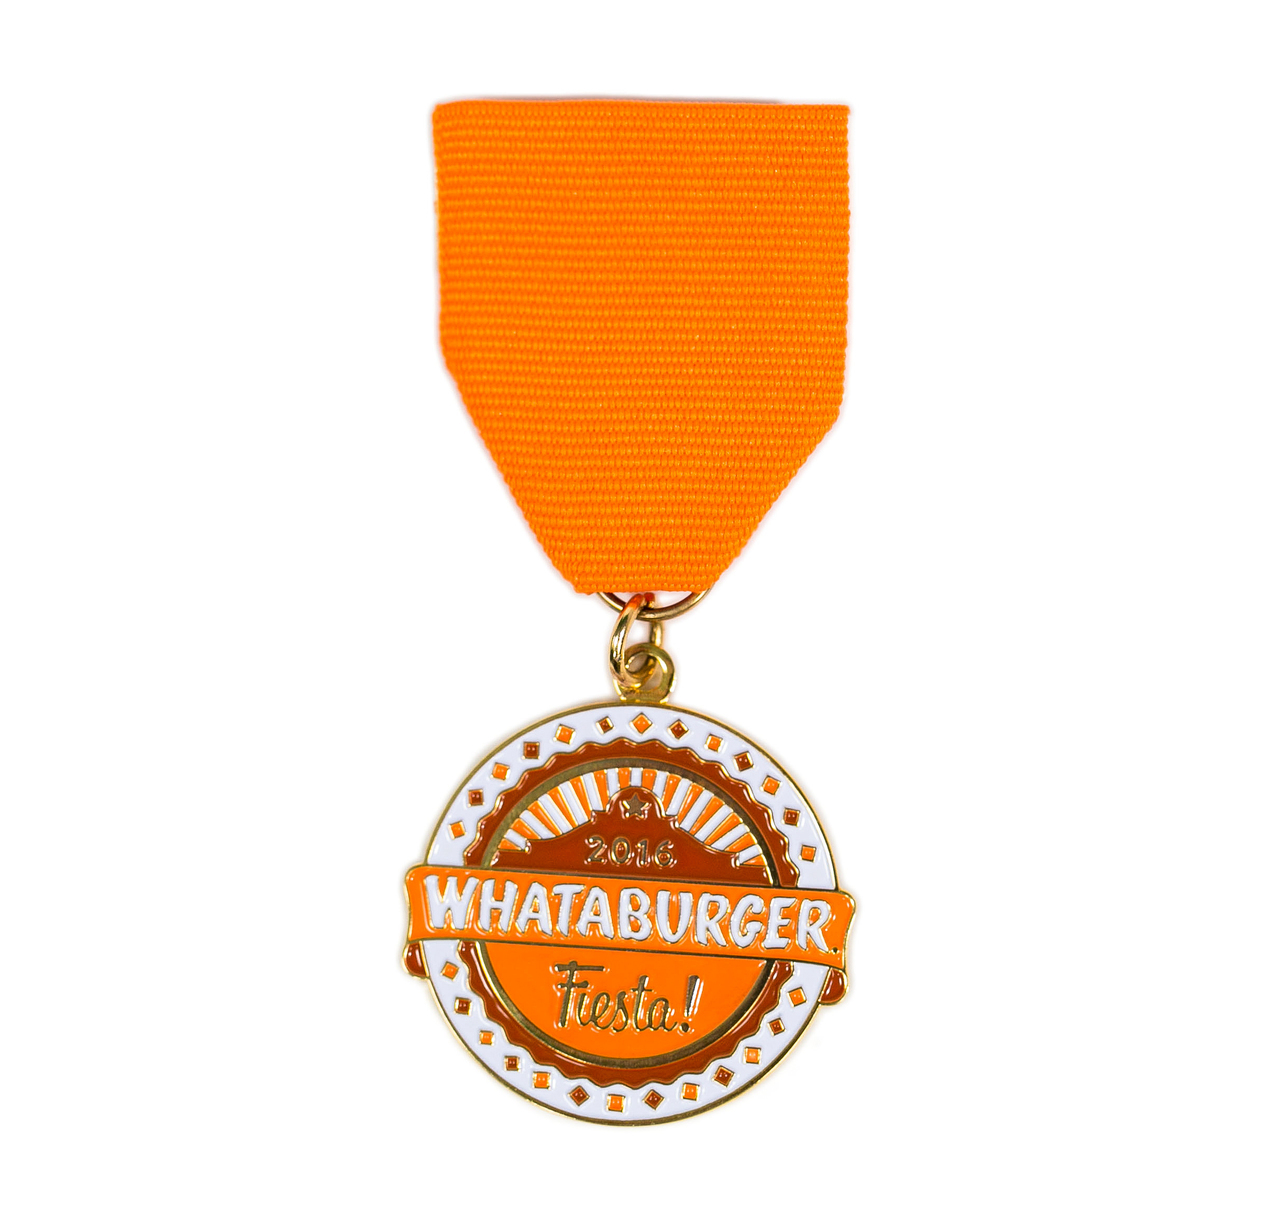 Whataburger unveils new Fiesta medals showcasing San Antonio pride